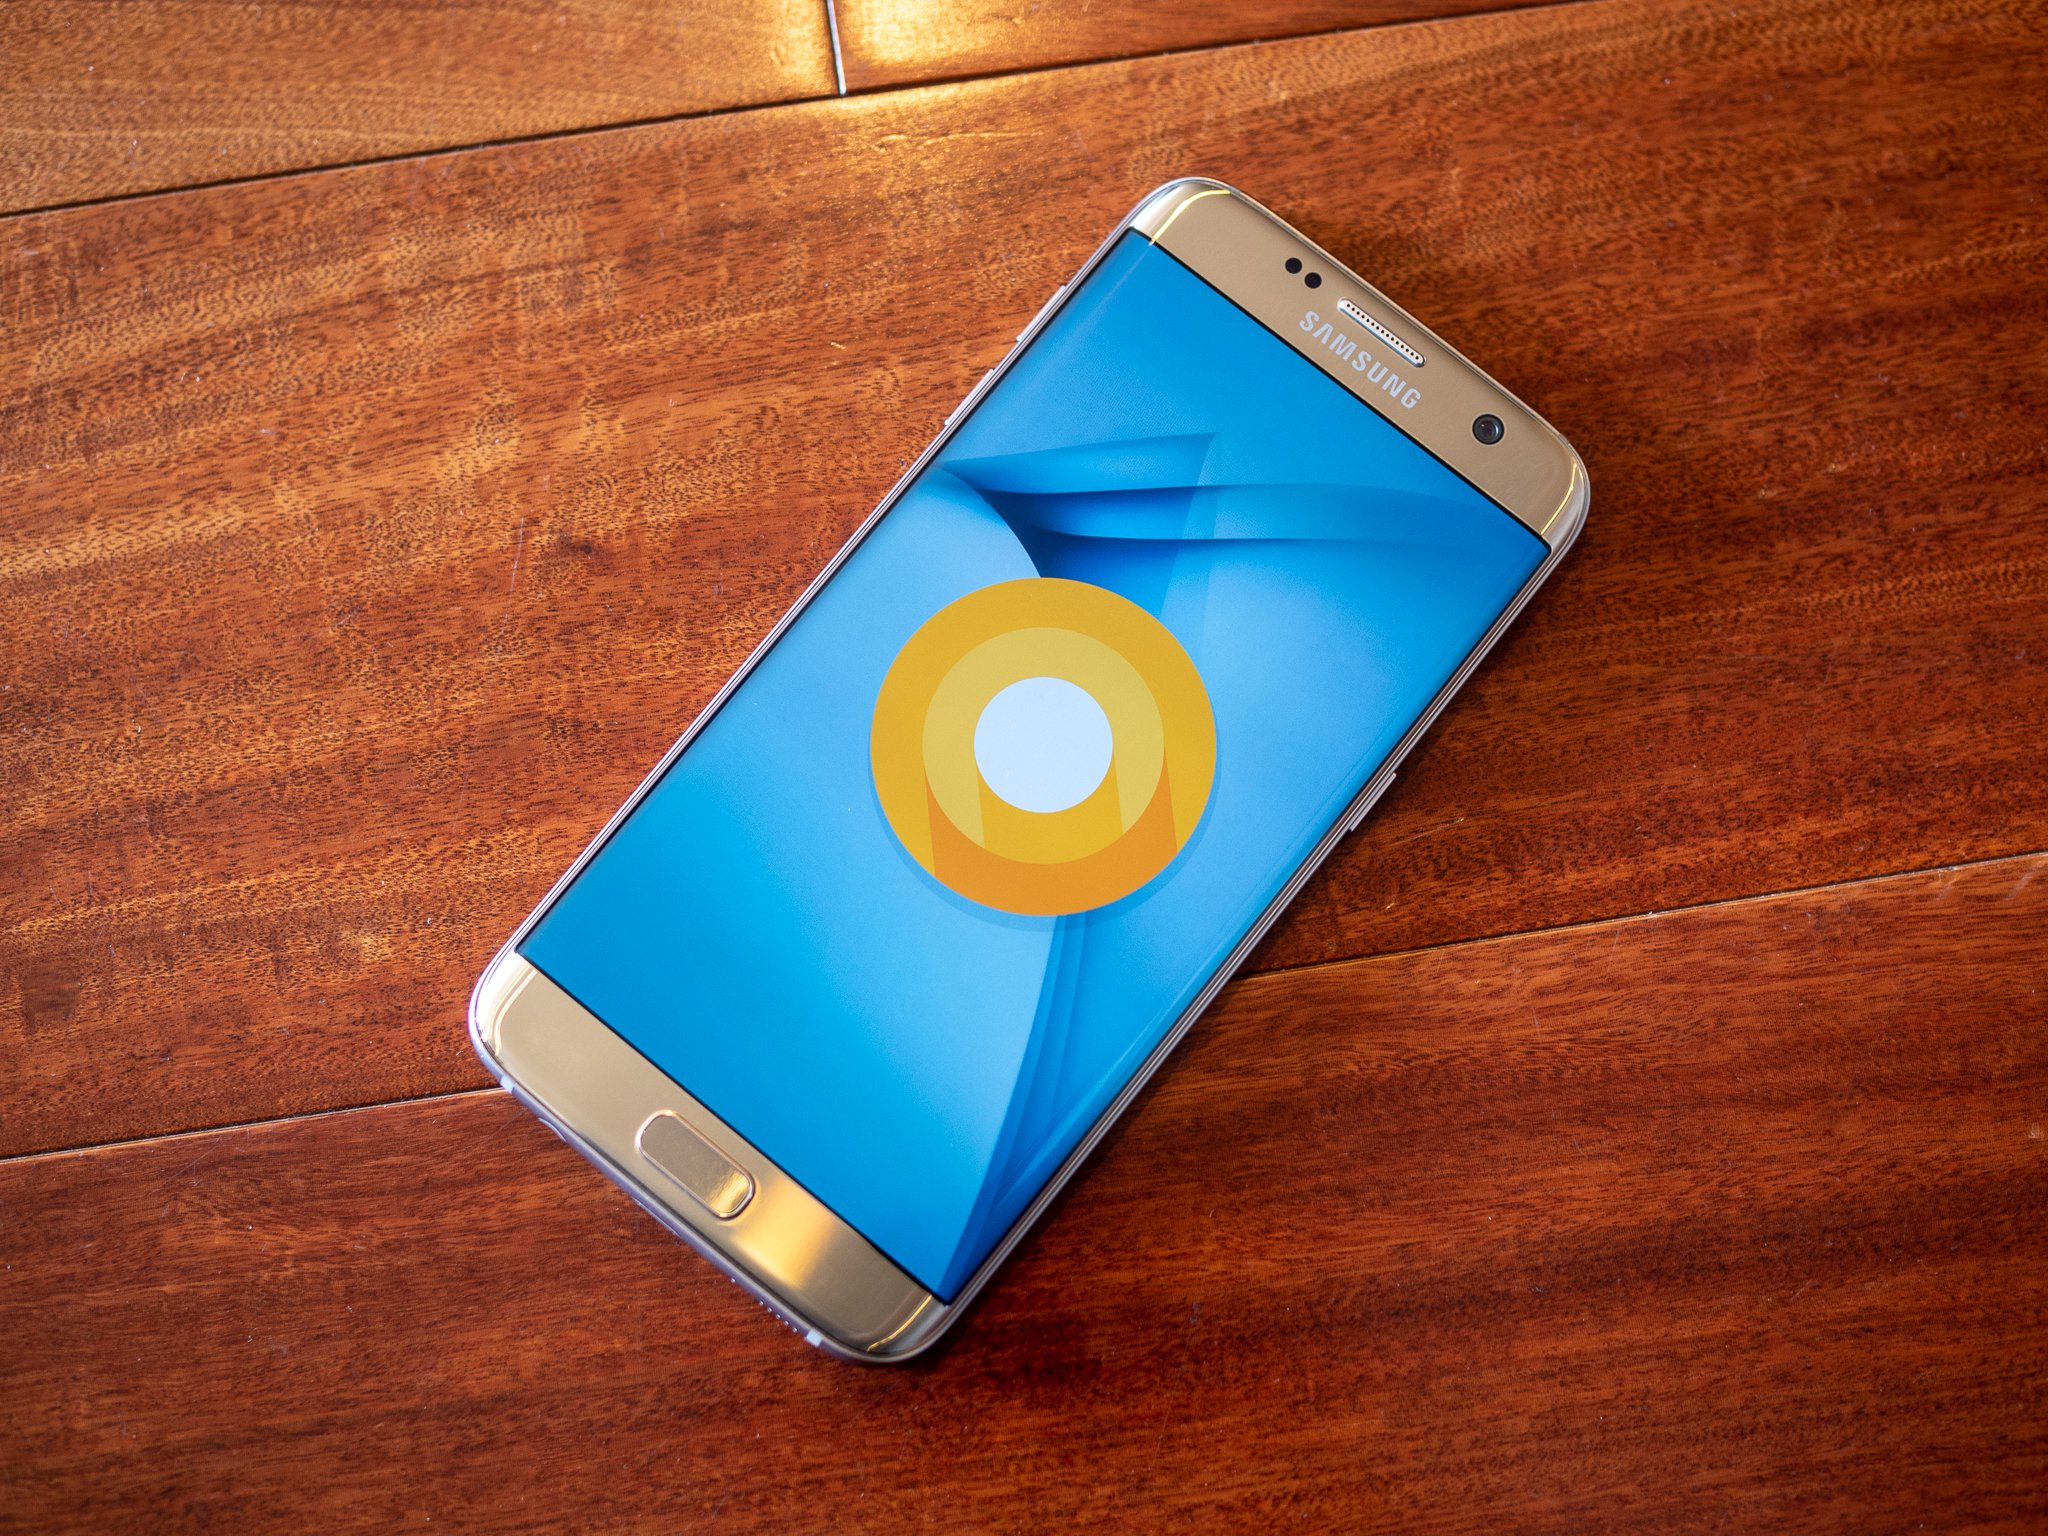 Samsung Galaxy Tab E soon to receive Android 8.0 Oreo at Verizon